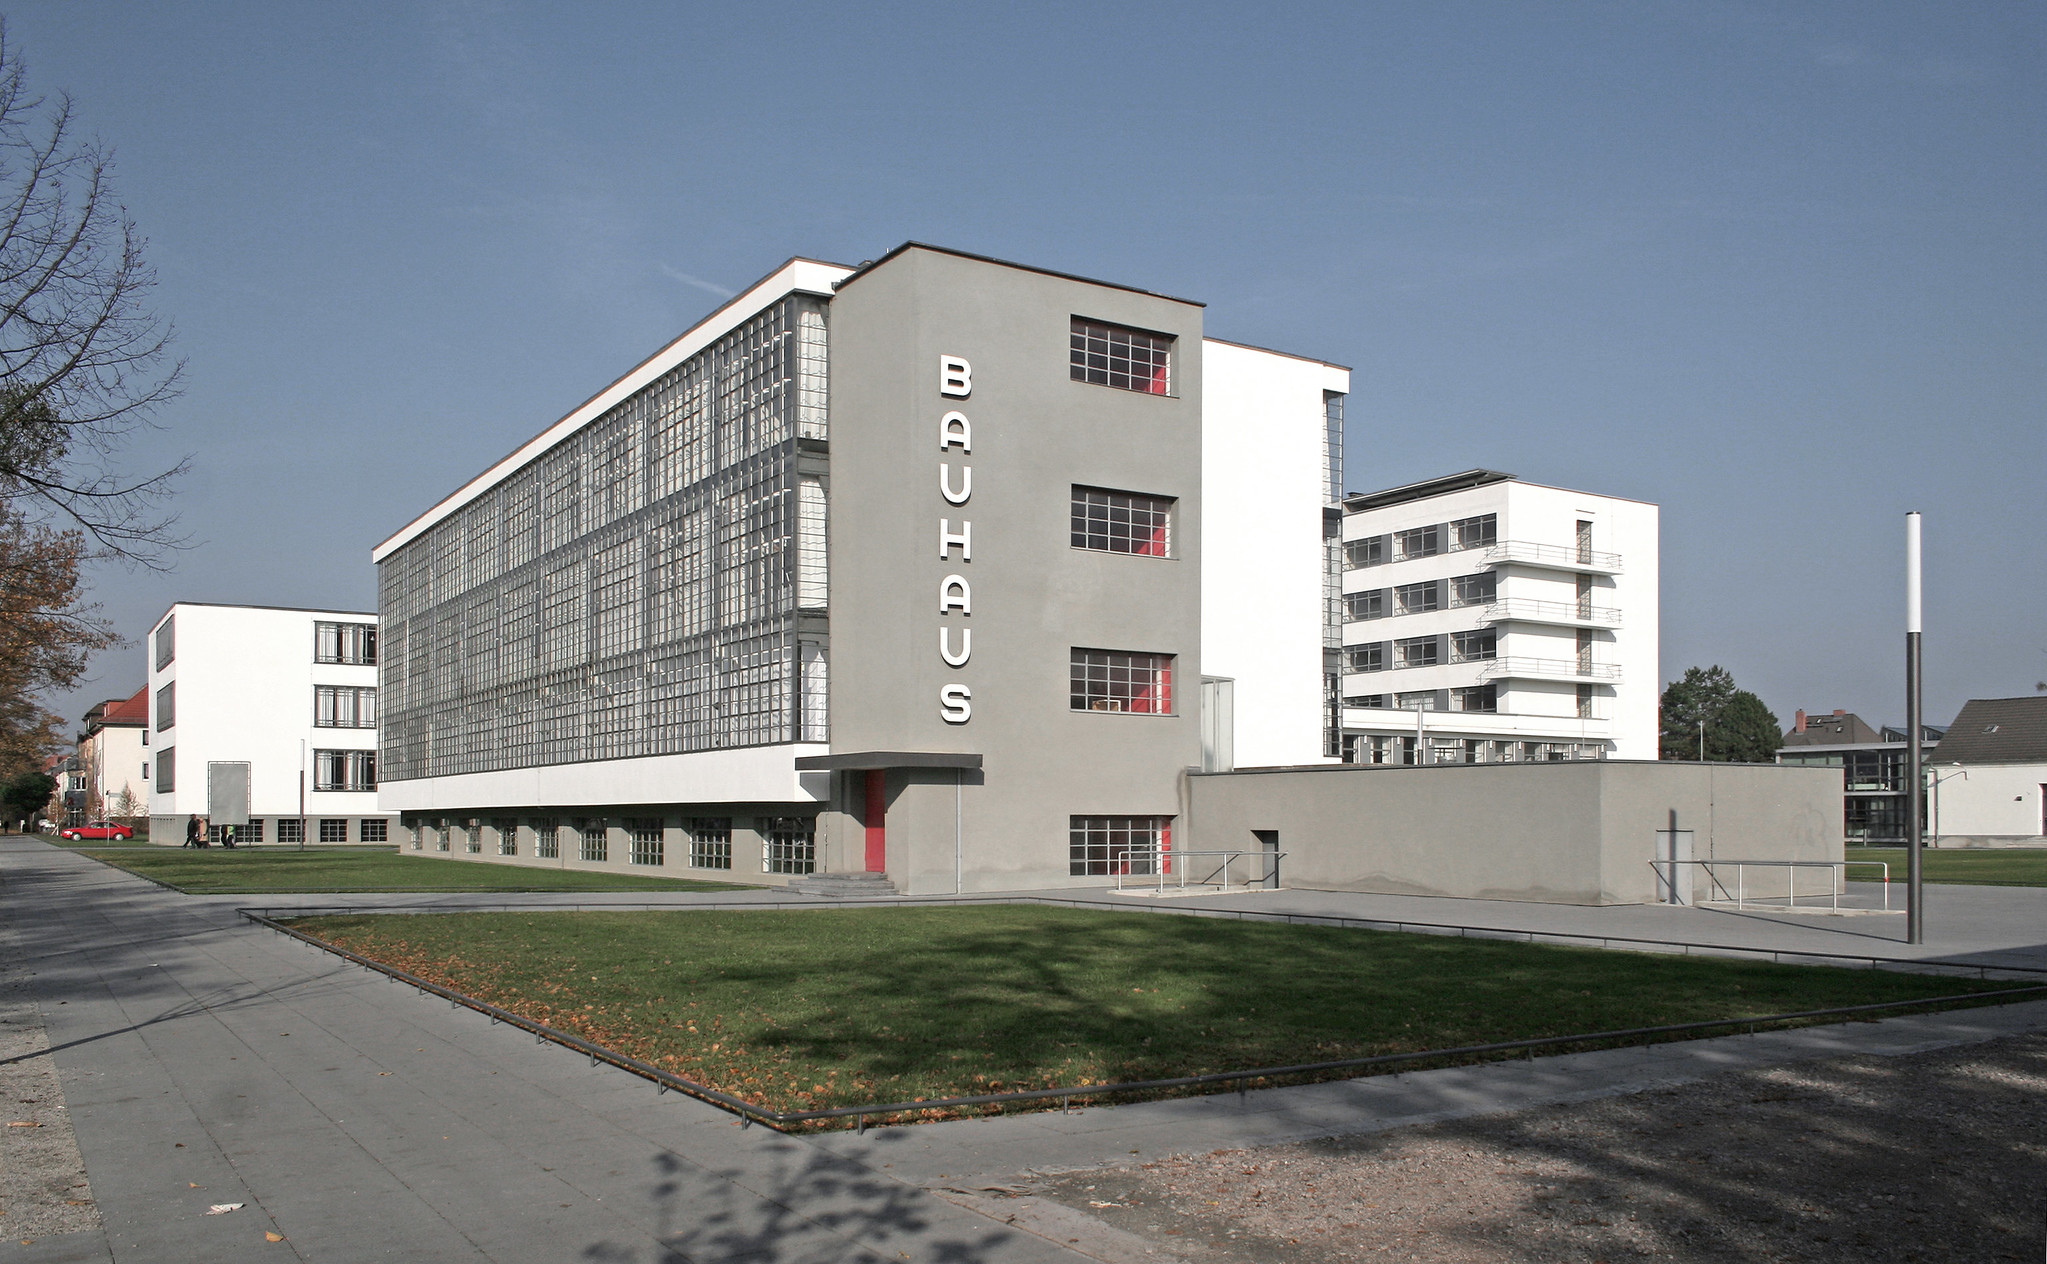 La Bauhaus